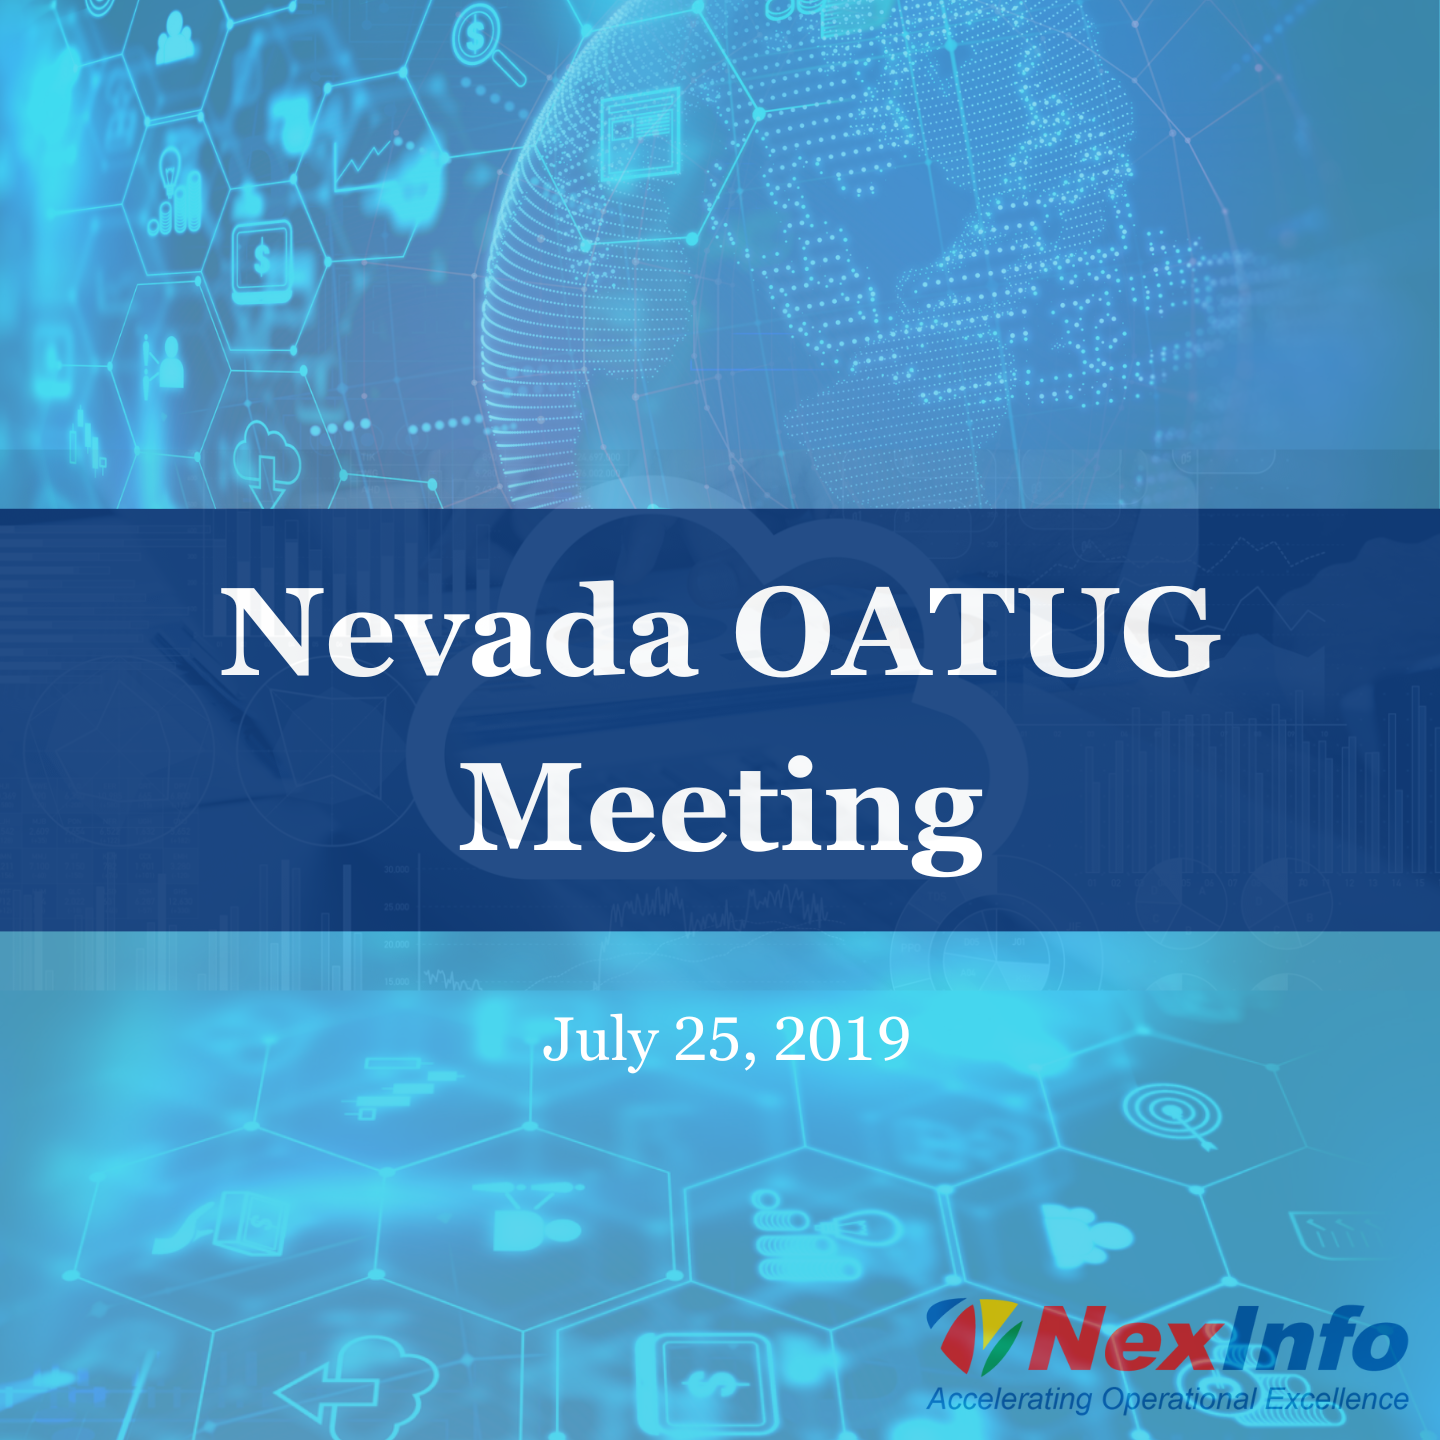 Nevada OATUG Meeting